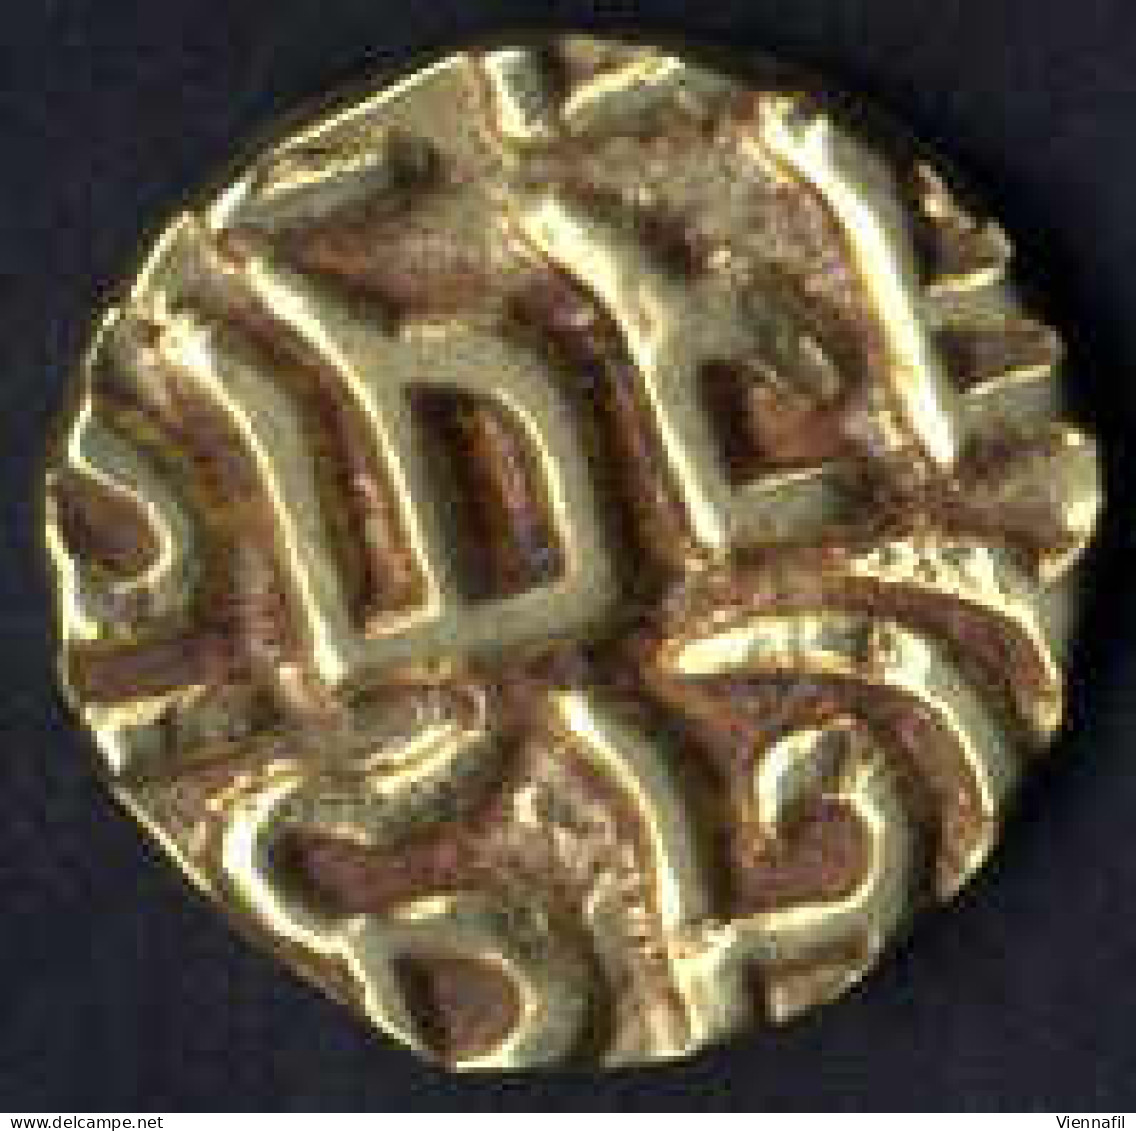 Chaulukyas Von Anahilapataka, Kumara Palayam, 1145-1171, Stater Gold, Mich NI&amp;CS 441ff, Sehr Selten, Vorzüglich - India